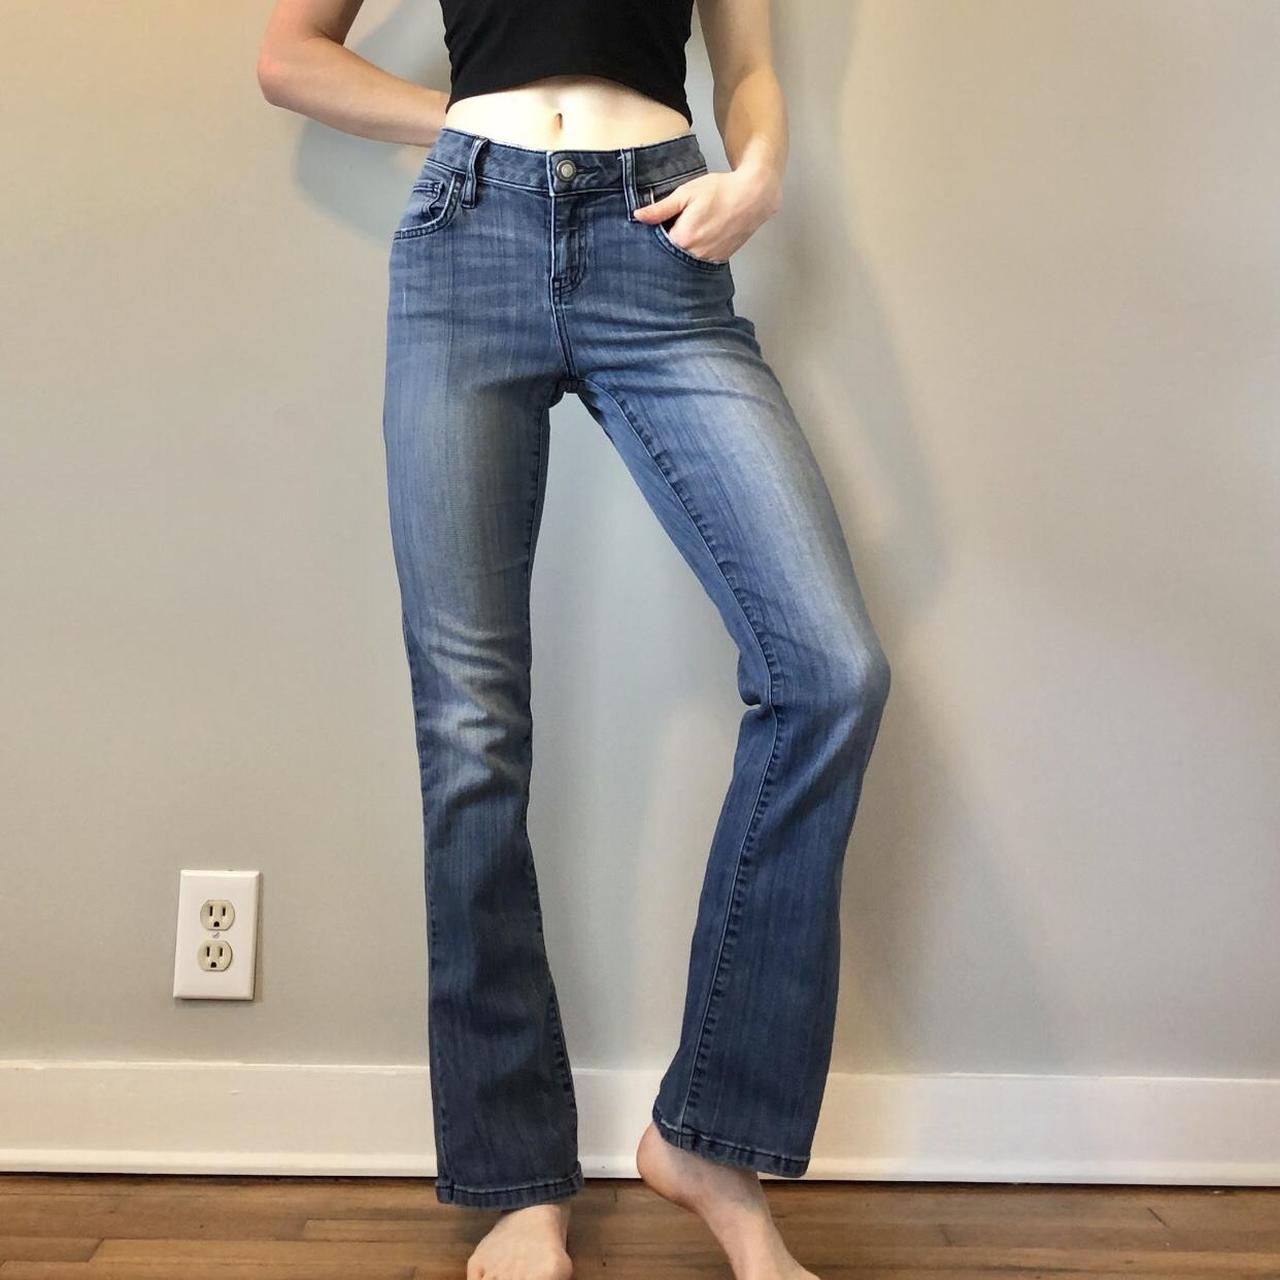 Simply Vera Vera Wang Rinse Skinny Jeans for Women